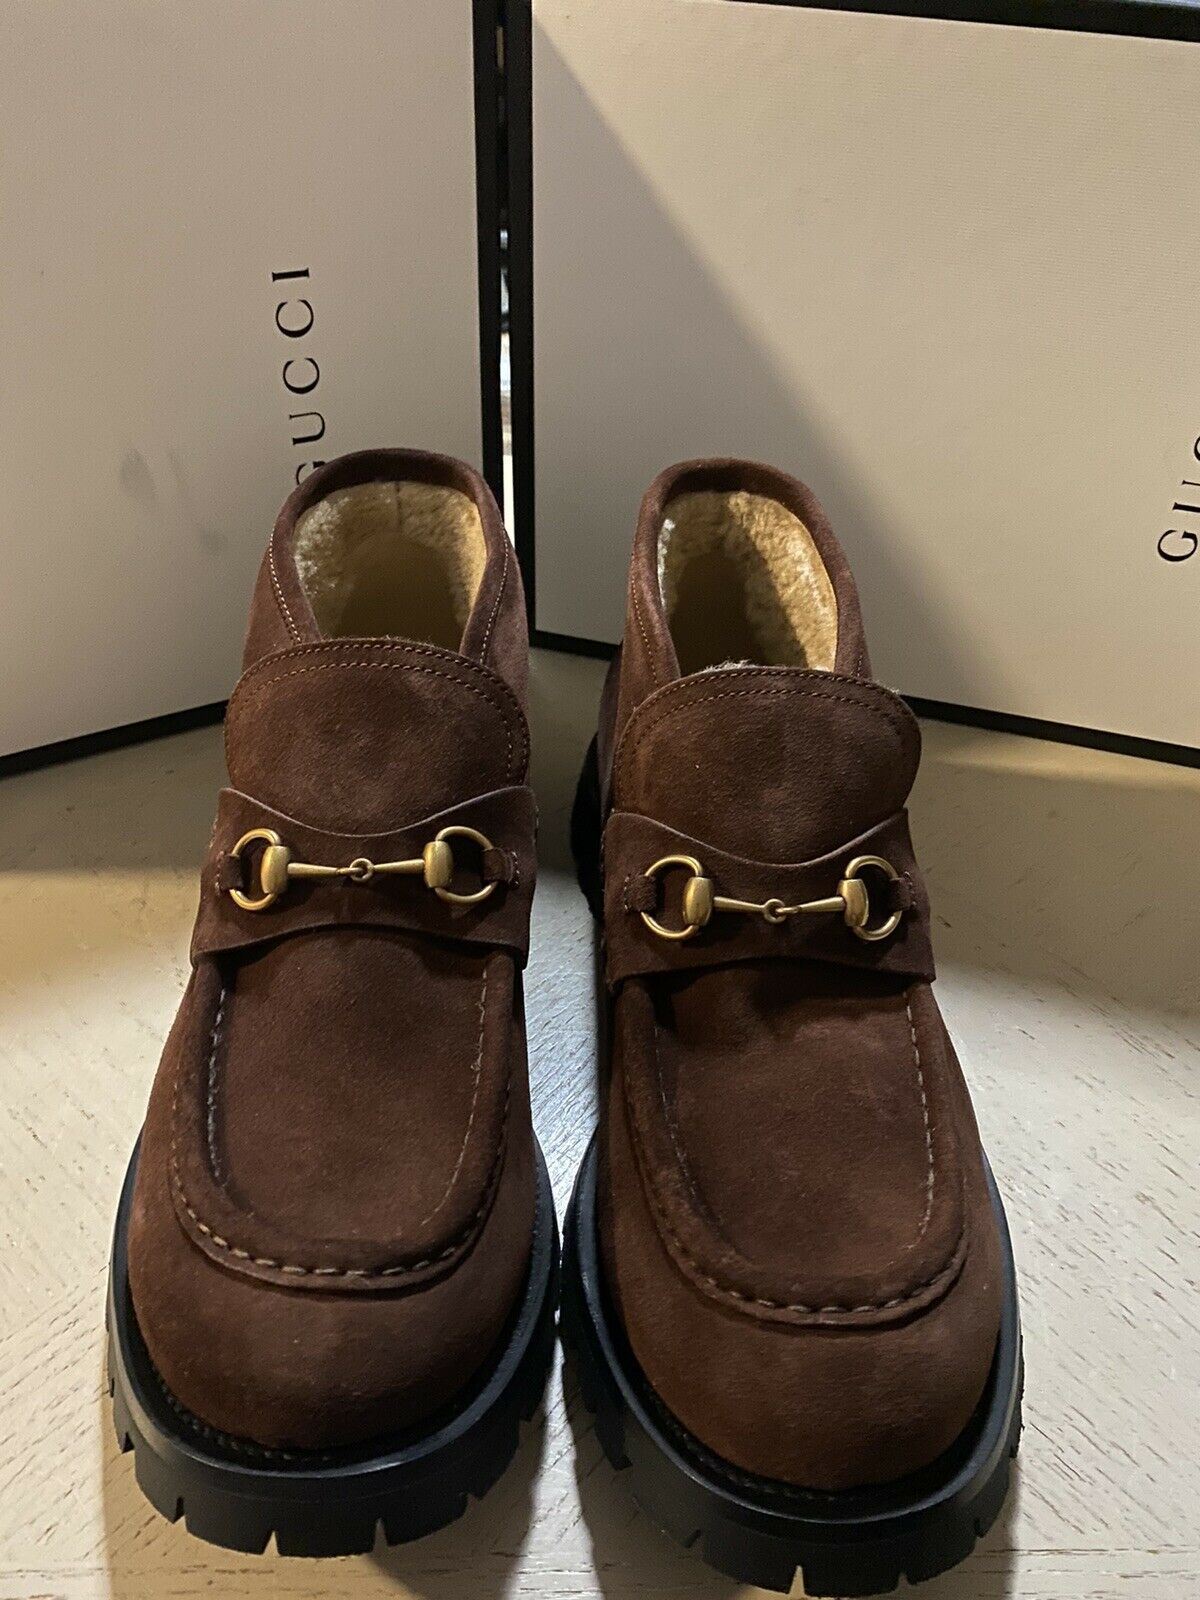 NIB $1400 Gucci Men’s Suede Ankle Boots Shoes DK Brown 7.5 US / 6.5 UK 575126